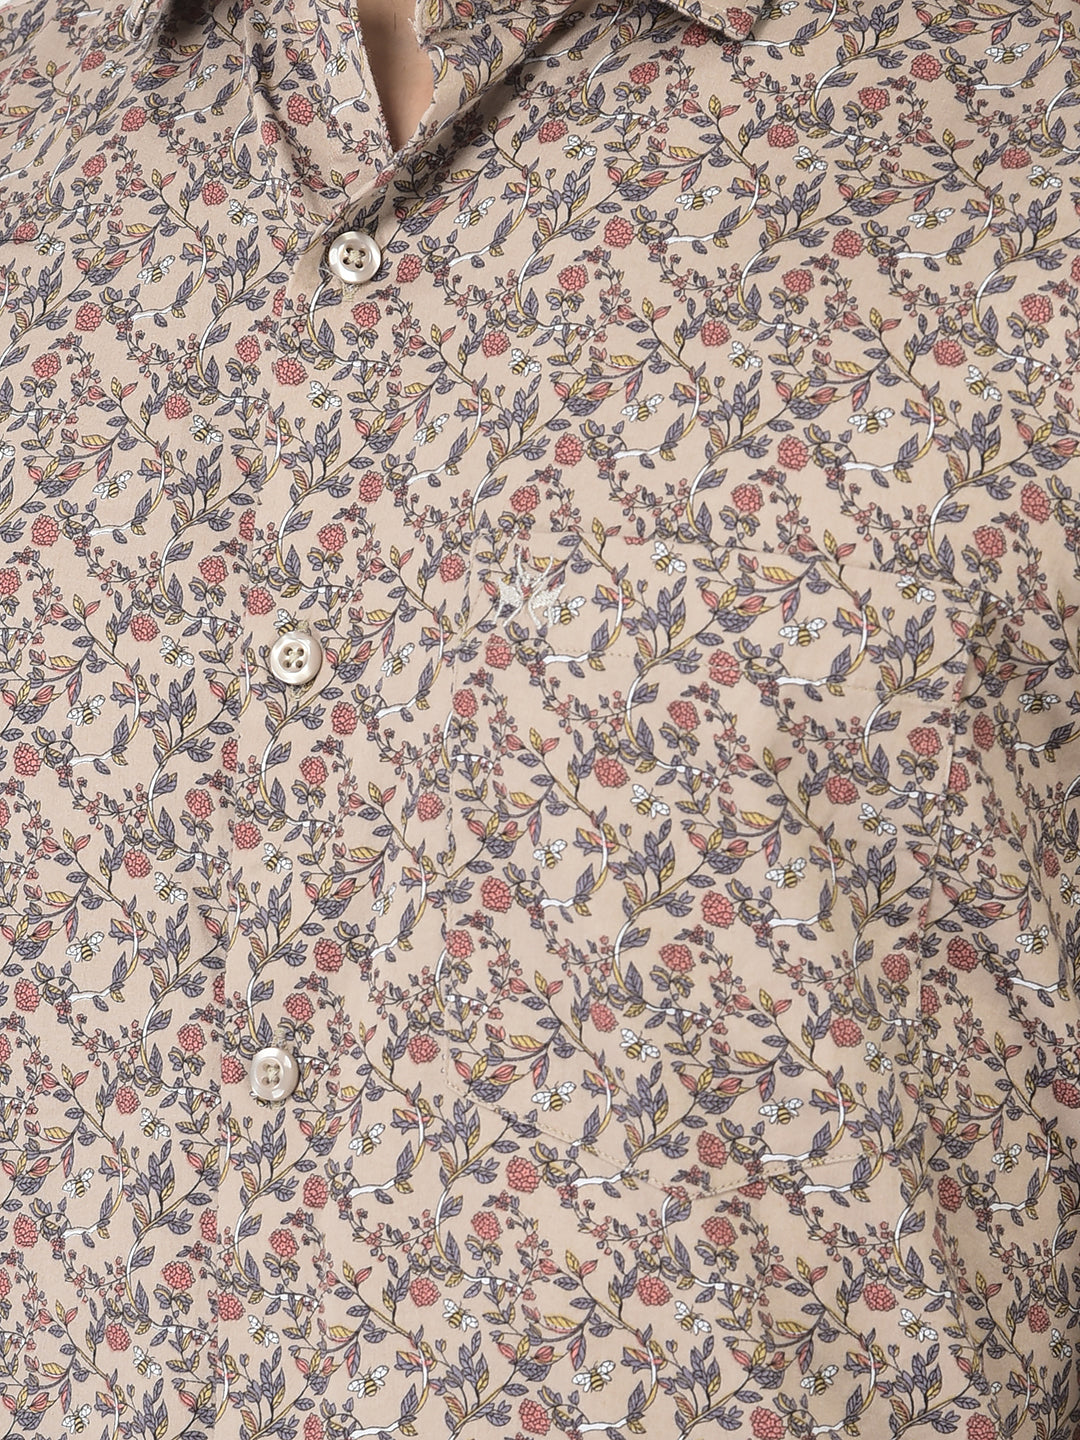  Beige Shirt in Floral Print